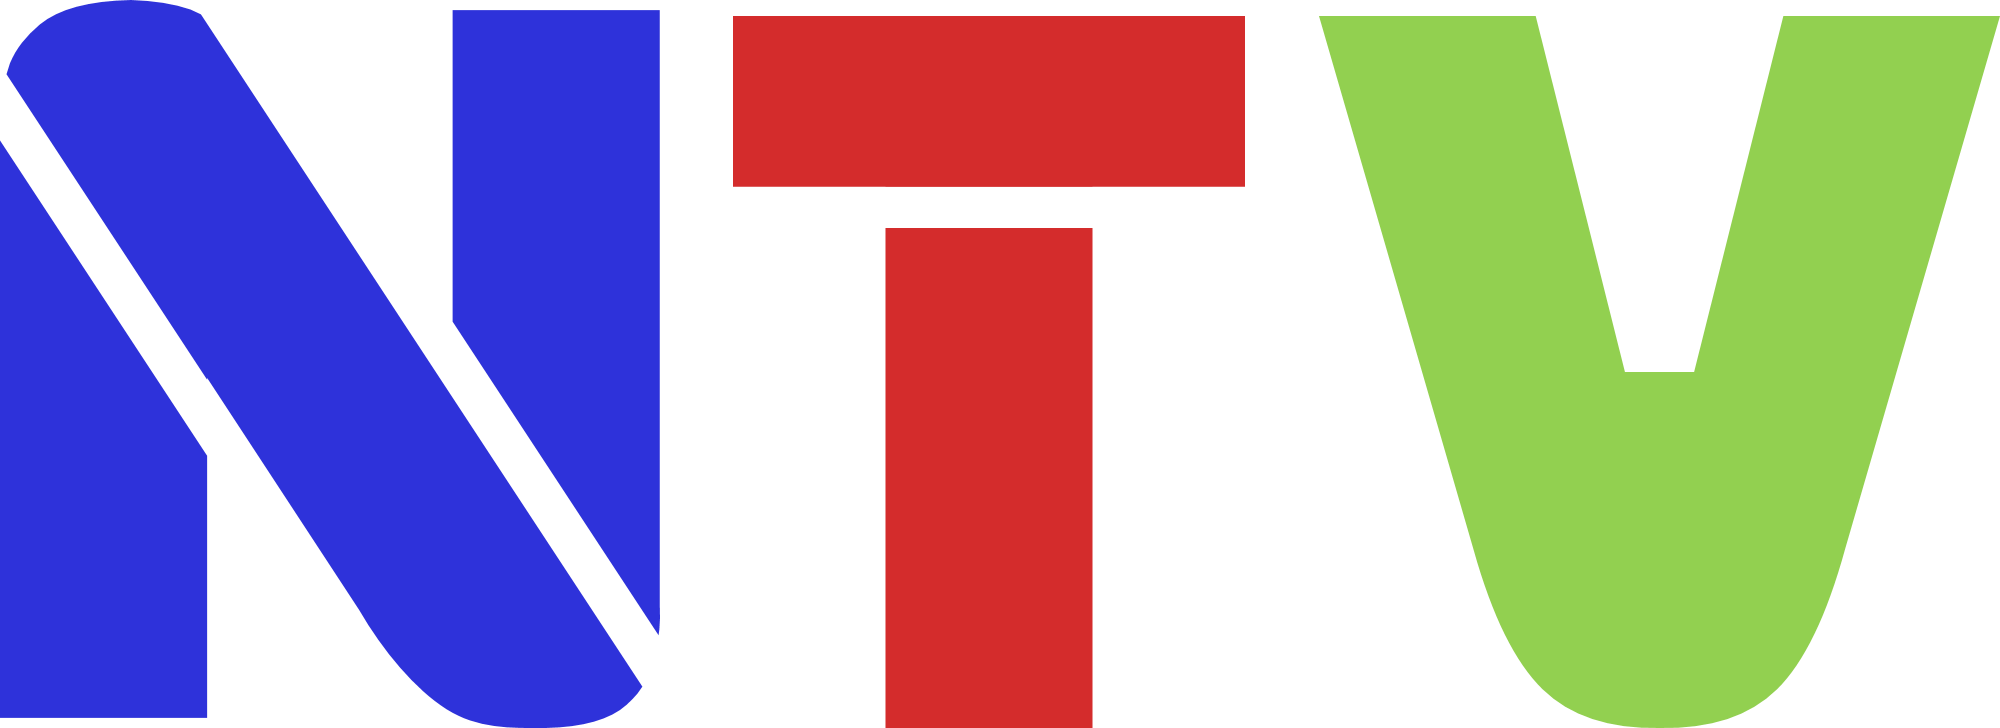 NTV Telugu Streaming online watch live TV | Live tv, Telugu, Arizona logo